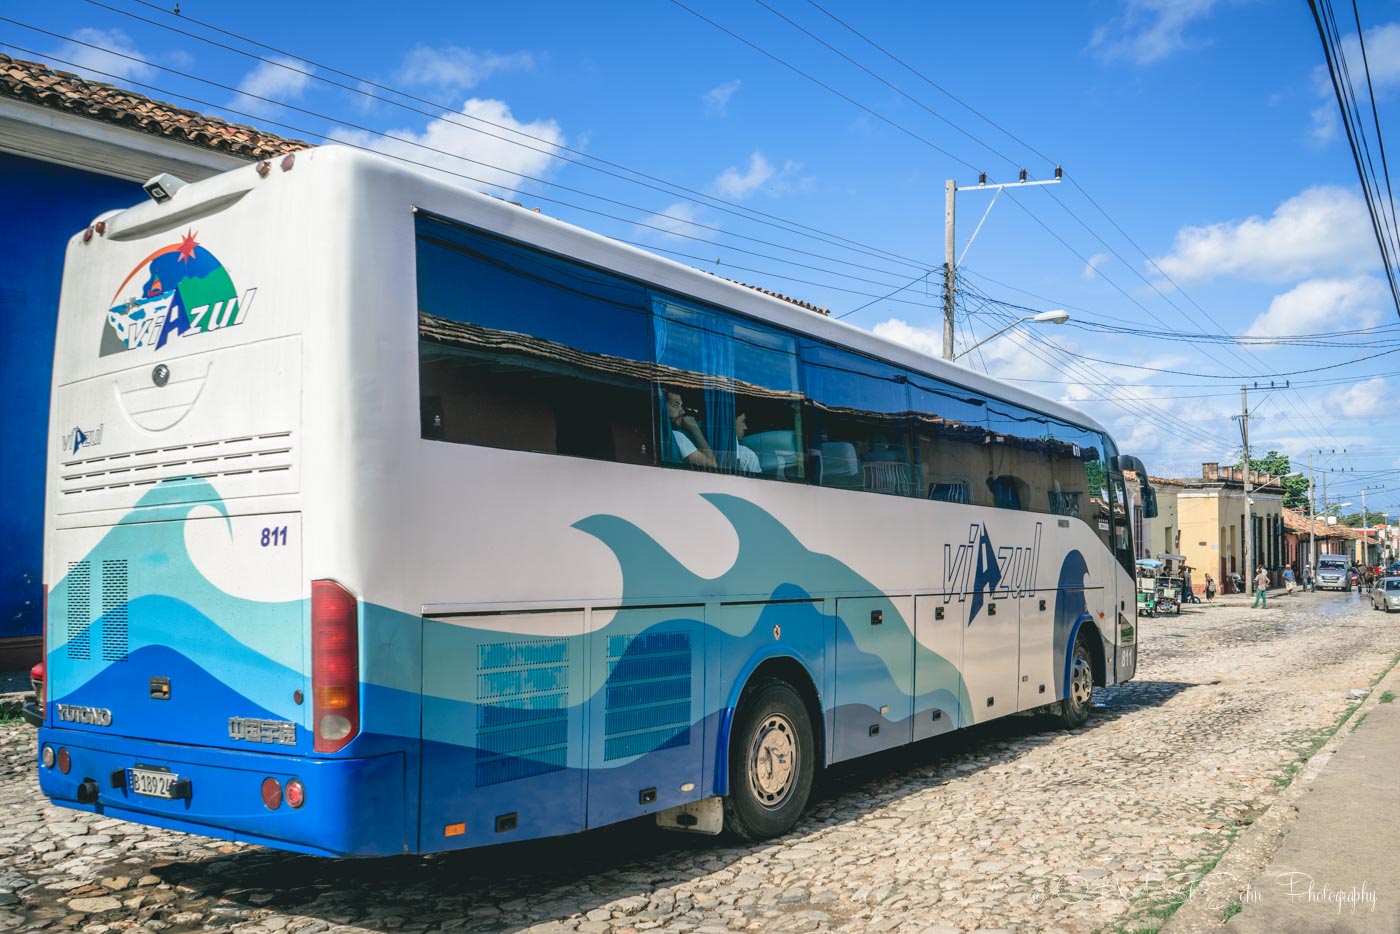 Cuba travel tips: Viazul bus service makes getting around Cuba difficult